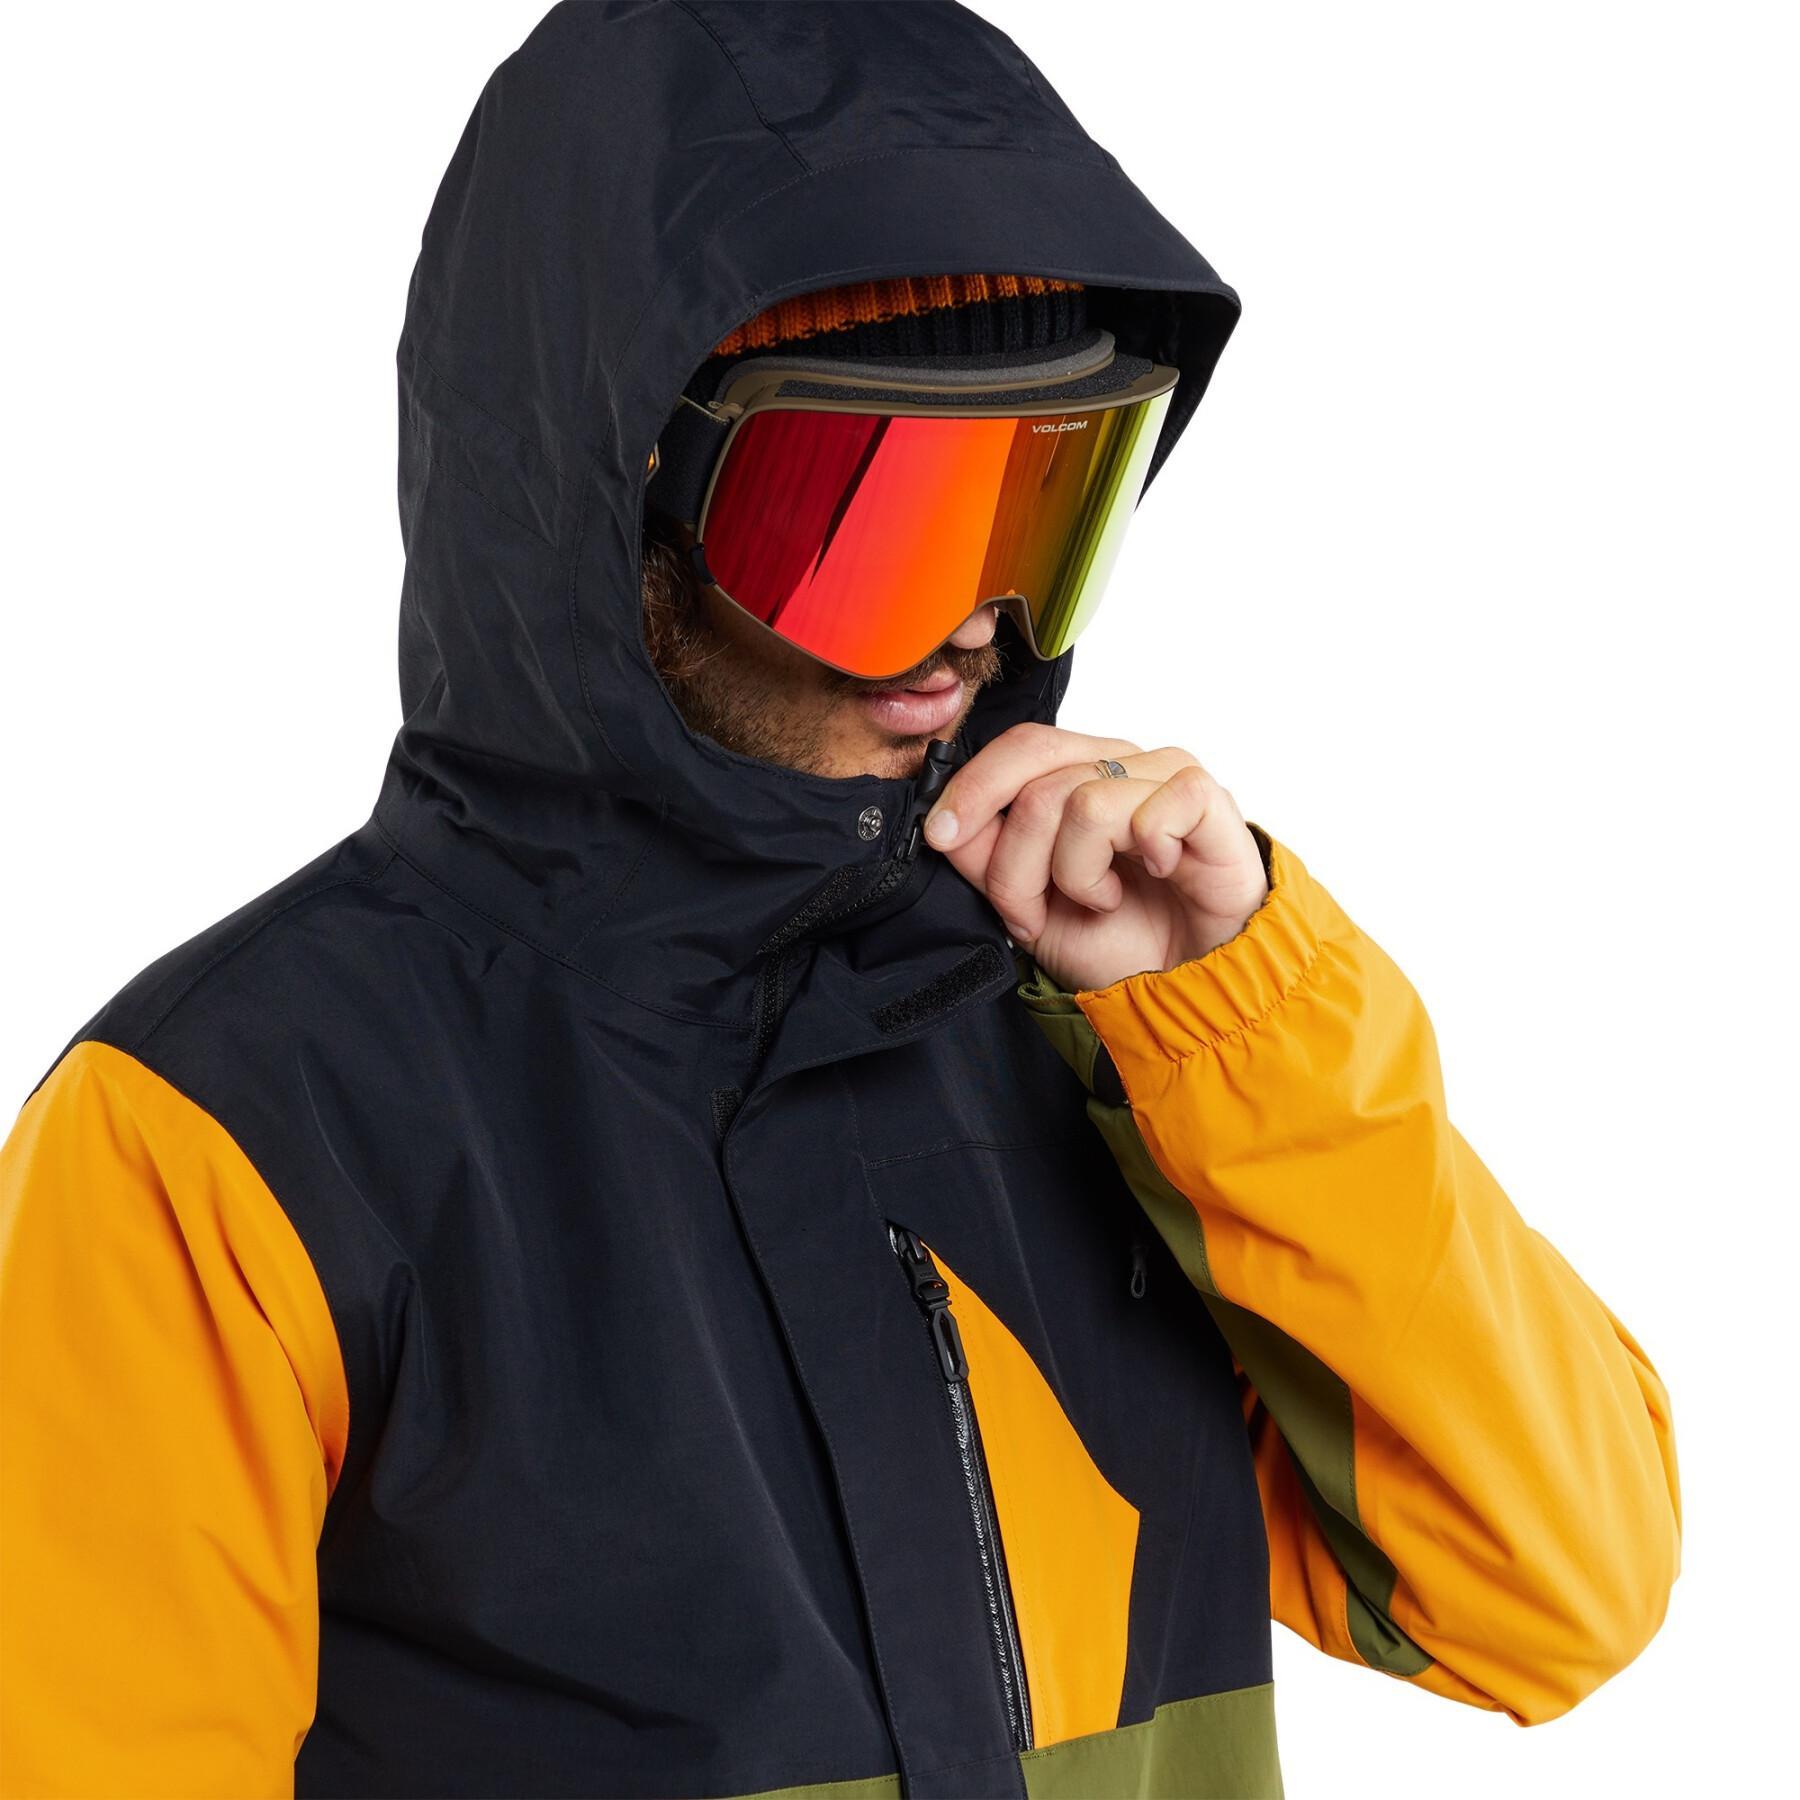 Ski jacket Volcom L Ins Gore-Tex